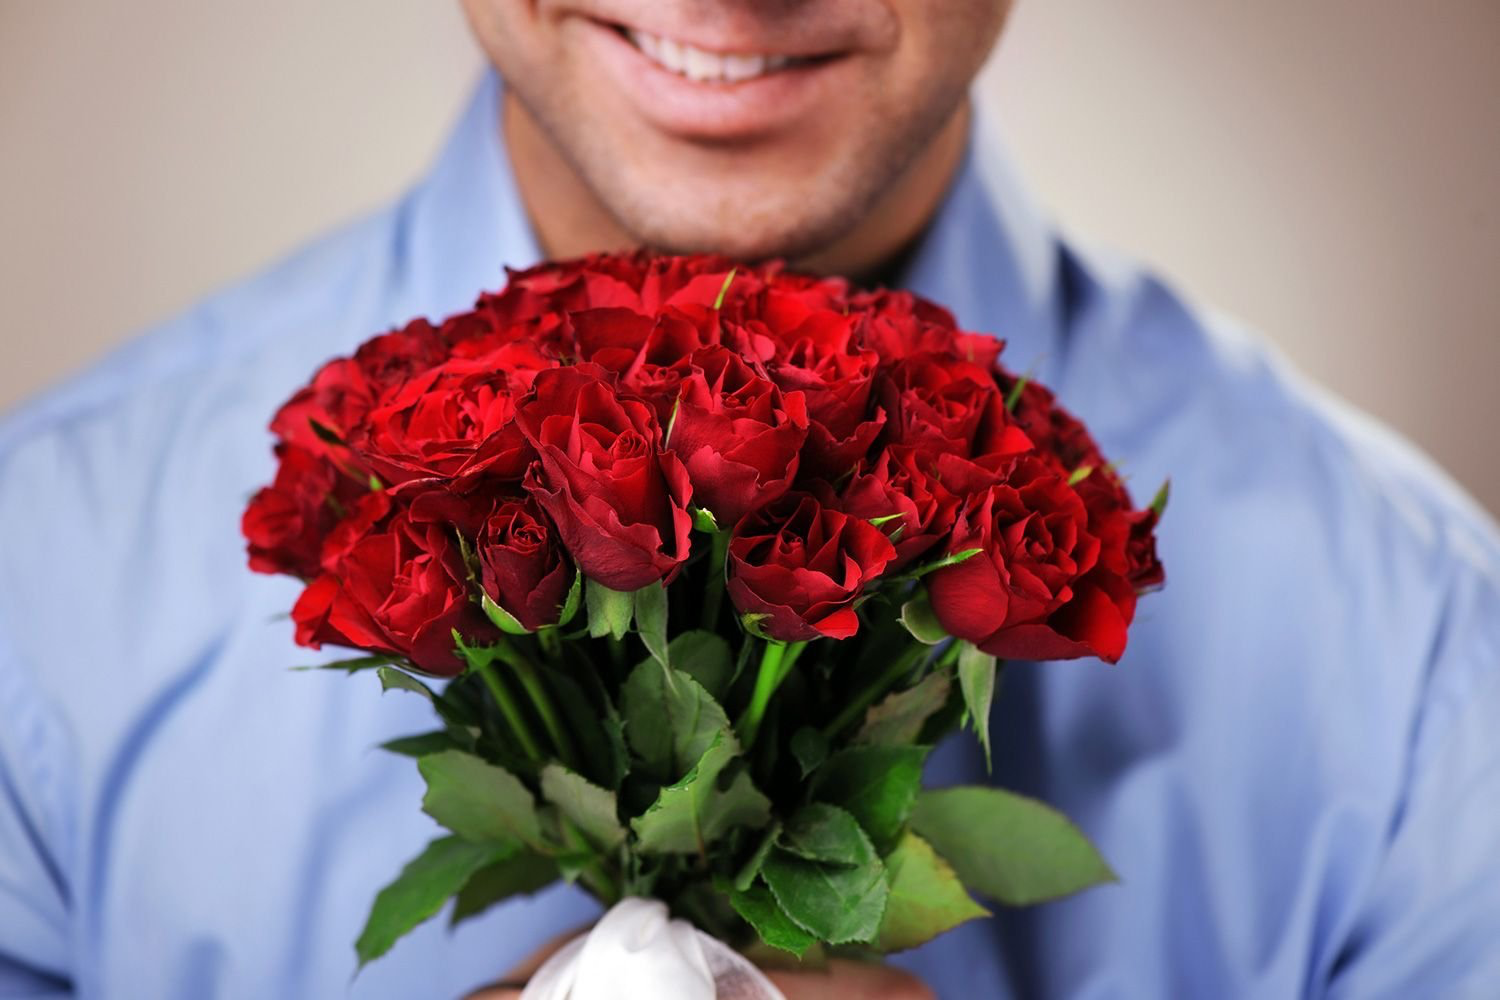 Какие цветы для мужчин. Мужчина с цветами. Букет цветов для мужчины. Мужчина с букетом роз. Мужчина дарит букет цветов.